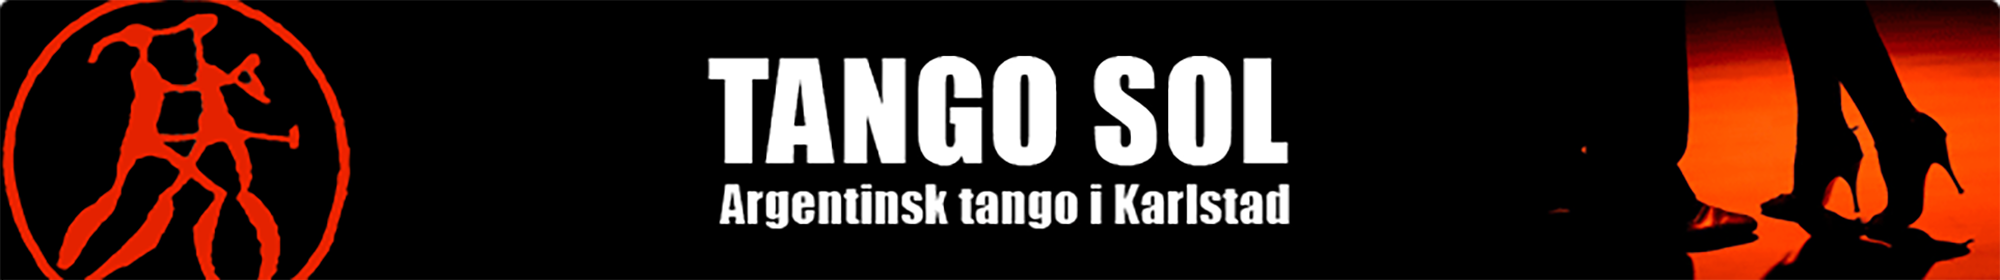 Tango Sol